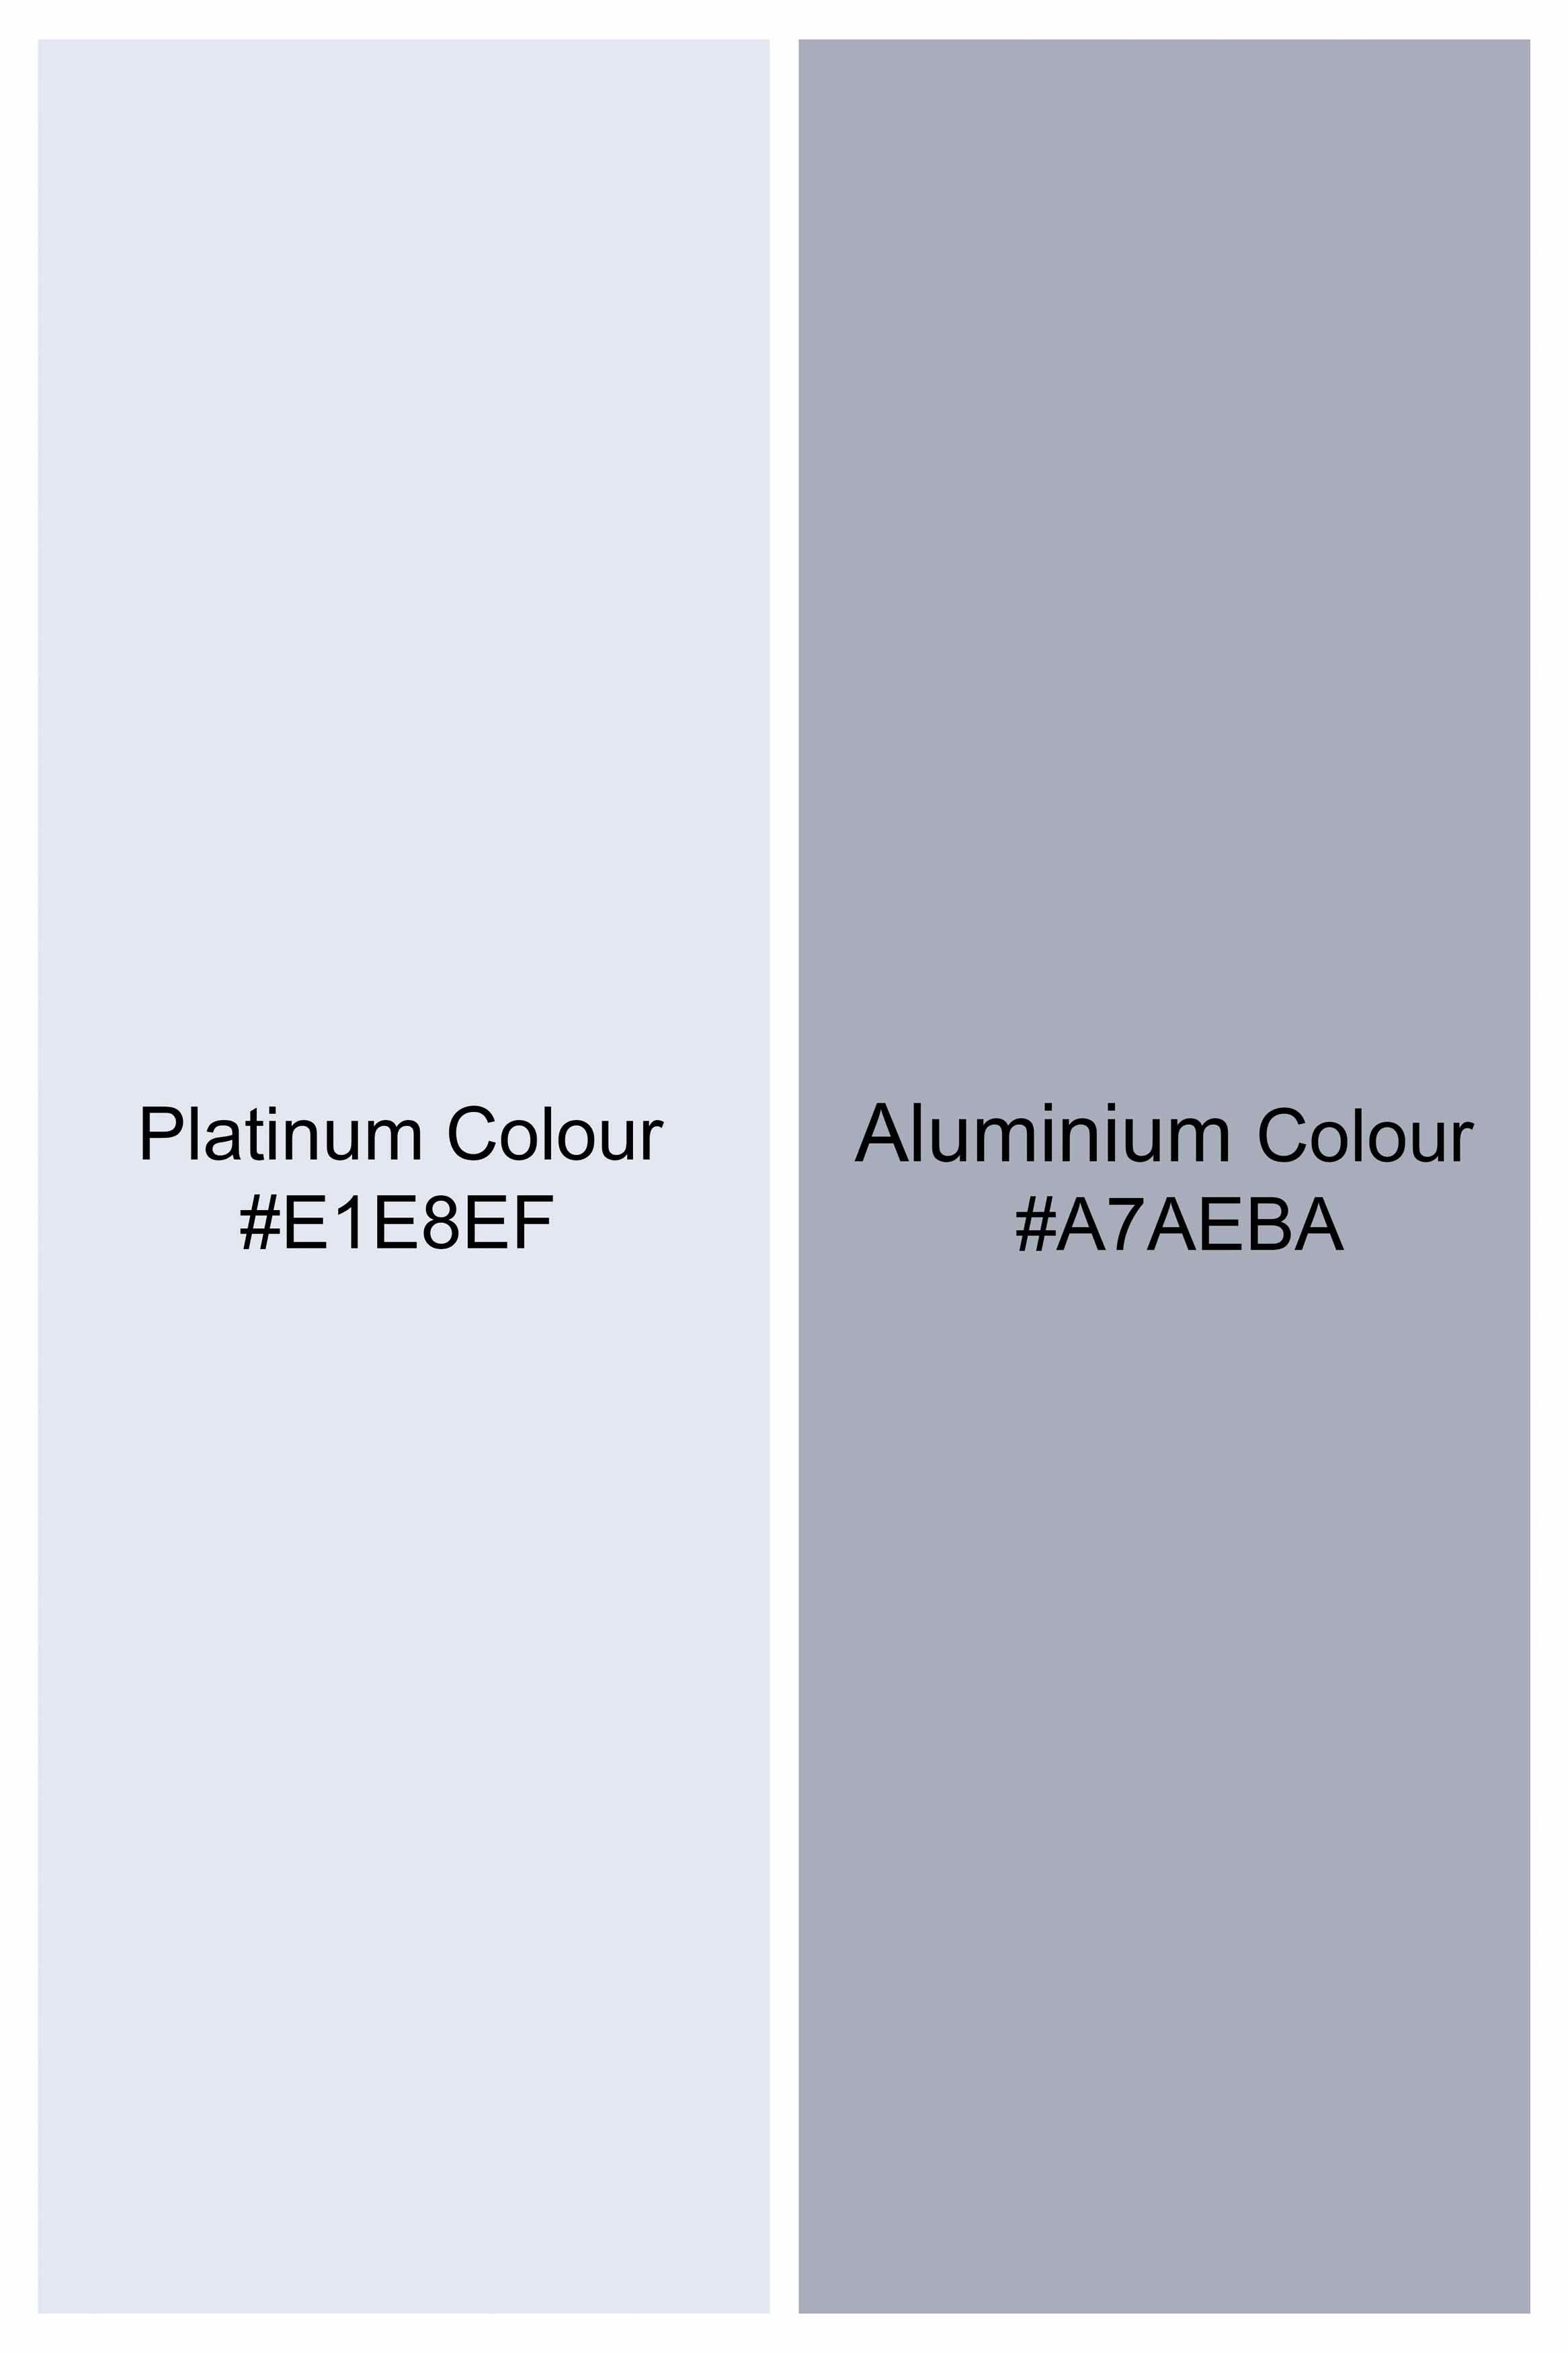 Platinum Blue and Aluminium Gray Striped with Hand Painted Premium Cotton Designer Shirt 6832-ART-38, 6832-ART-H-38, 6832-ART-39, 6832-ART-H-39, 6832-ART-40, 6832-ART-H-40, 6832-ART-42, 6832-ART-H-42, 6832-ART-44, 6832-ART-H-44, 6832-ART-46, 6832-ART-H-46, 6832-ART-48, 6832-ART-H-48, 6832-ART-50, 6832-ART-H-50, 6832-ART-52, 6832-ART-H-52